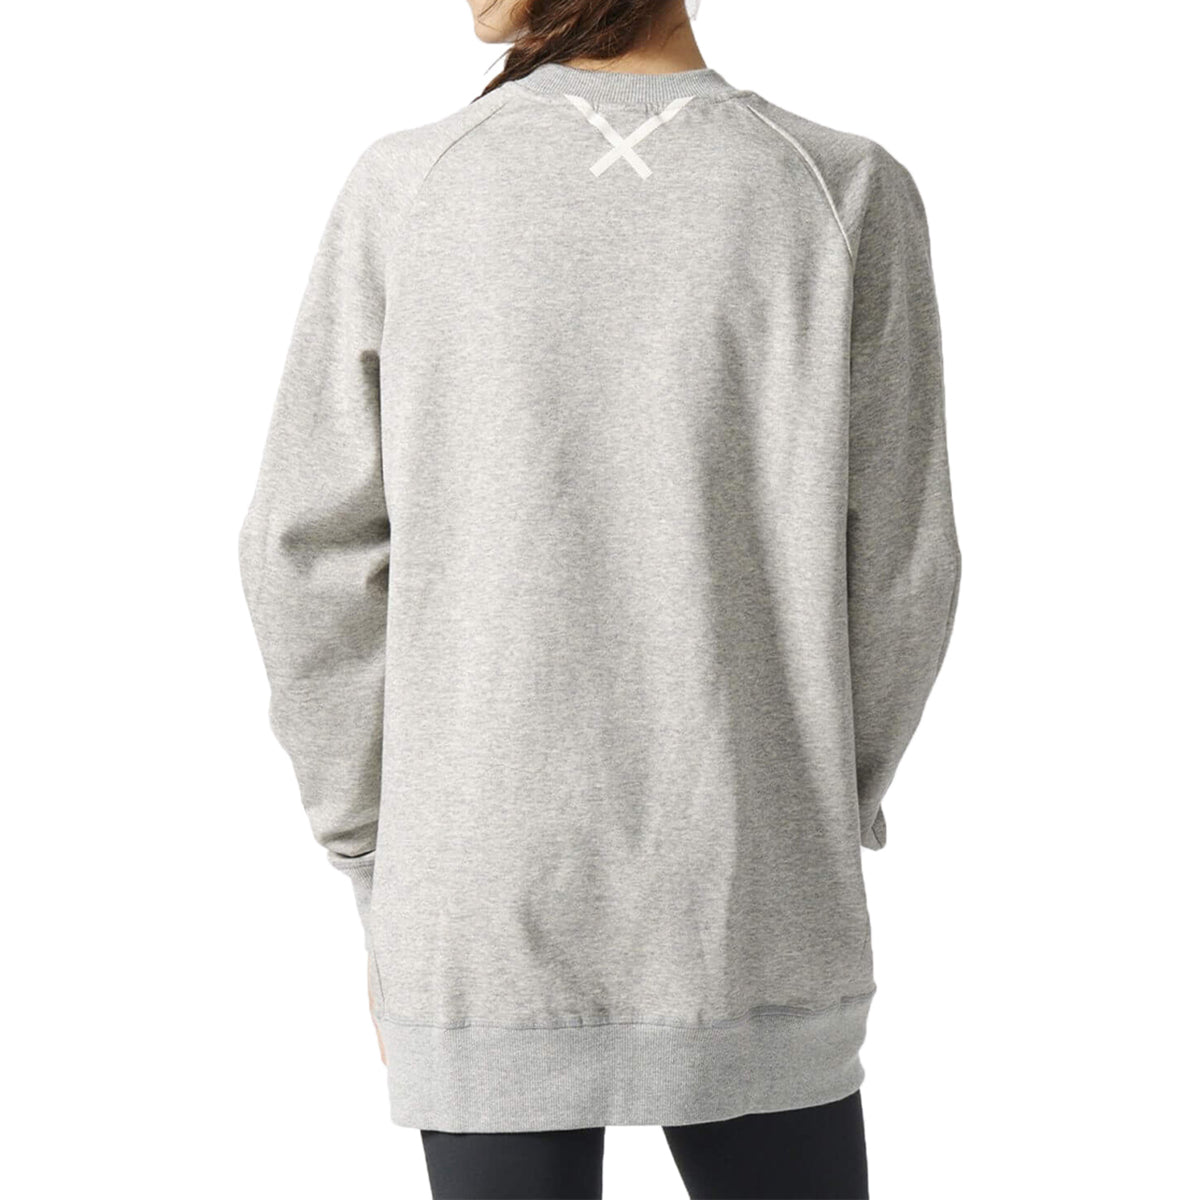 Adidas Xbyo Sweatshirt Mens Style : Bk2300